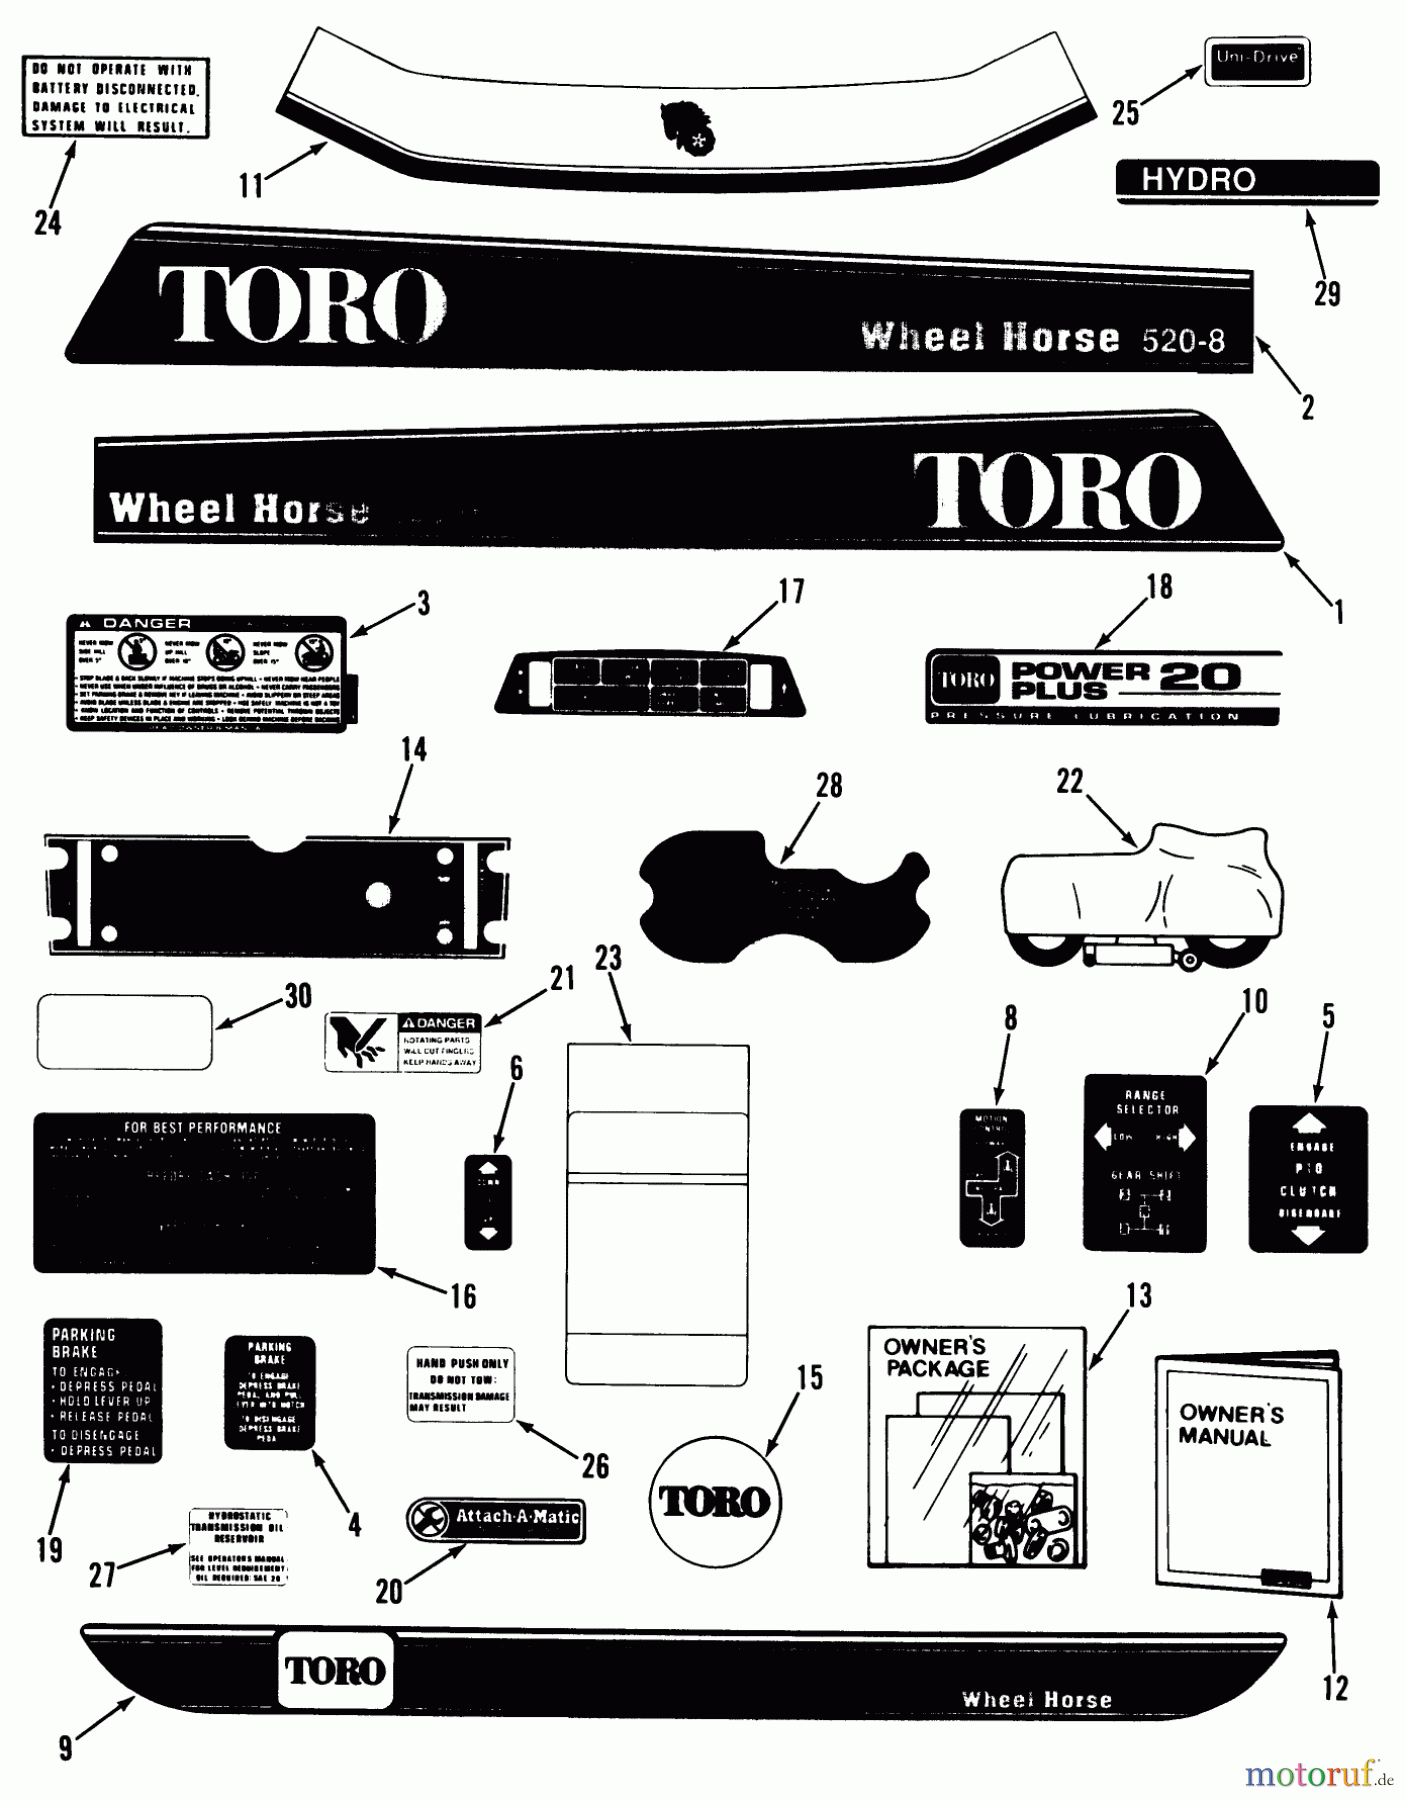  Toro Neu Mowers, Lawn & Garden Tractor Seite 1 41-20O801 (520-8) - Toro 520-8 Garden Tractor, 1990 DECALS